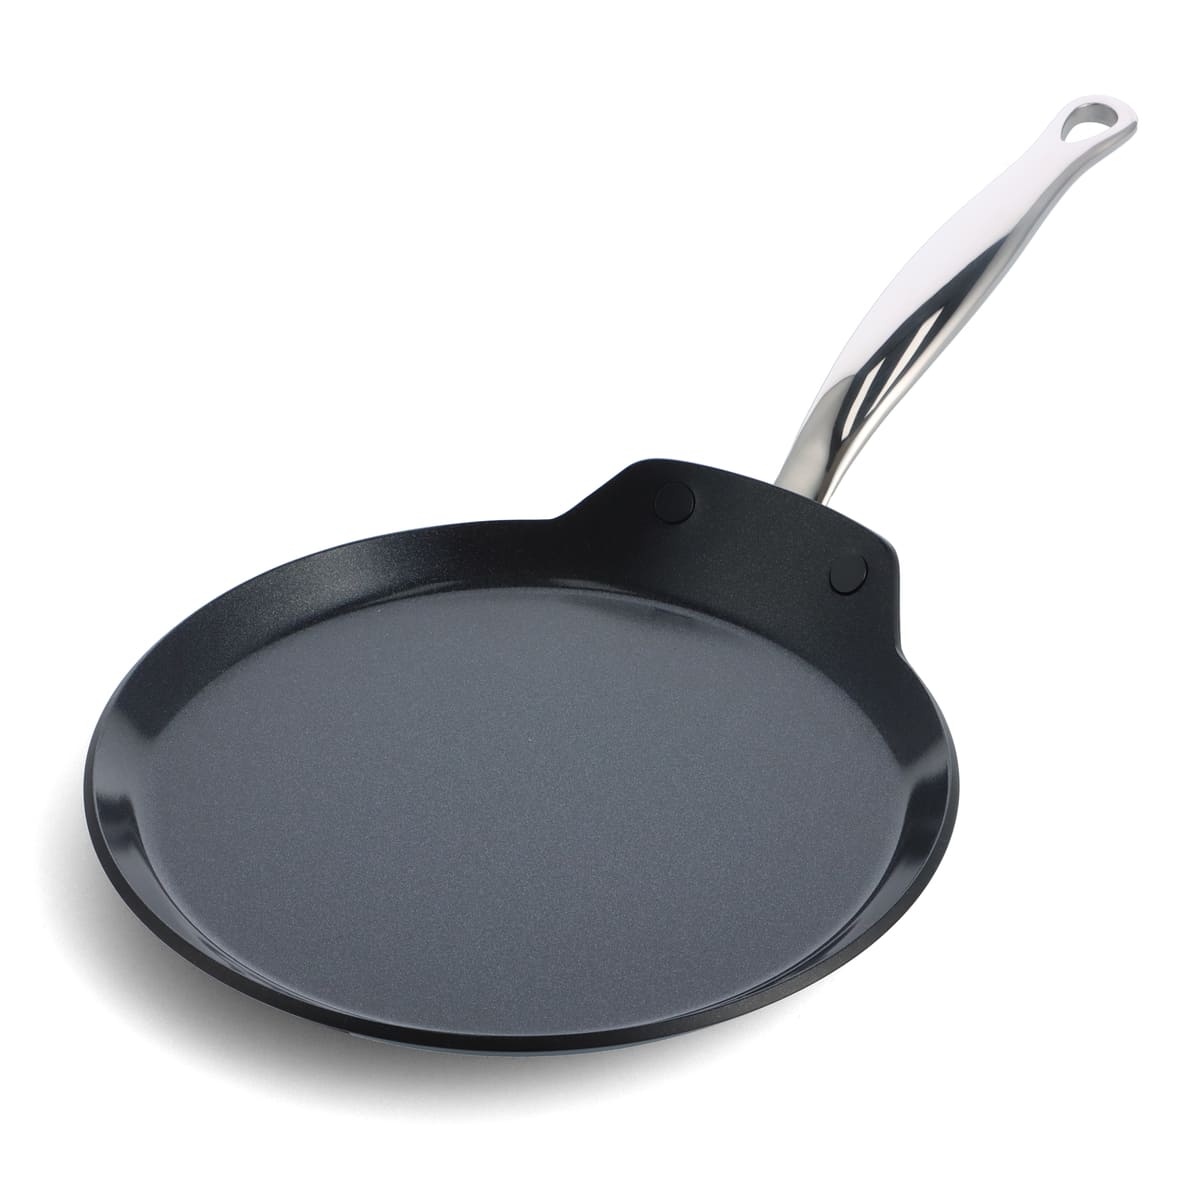 CC005337-001 - Barcelona Pro pancake pan, black - 24cm - Product Image 1